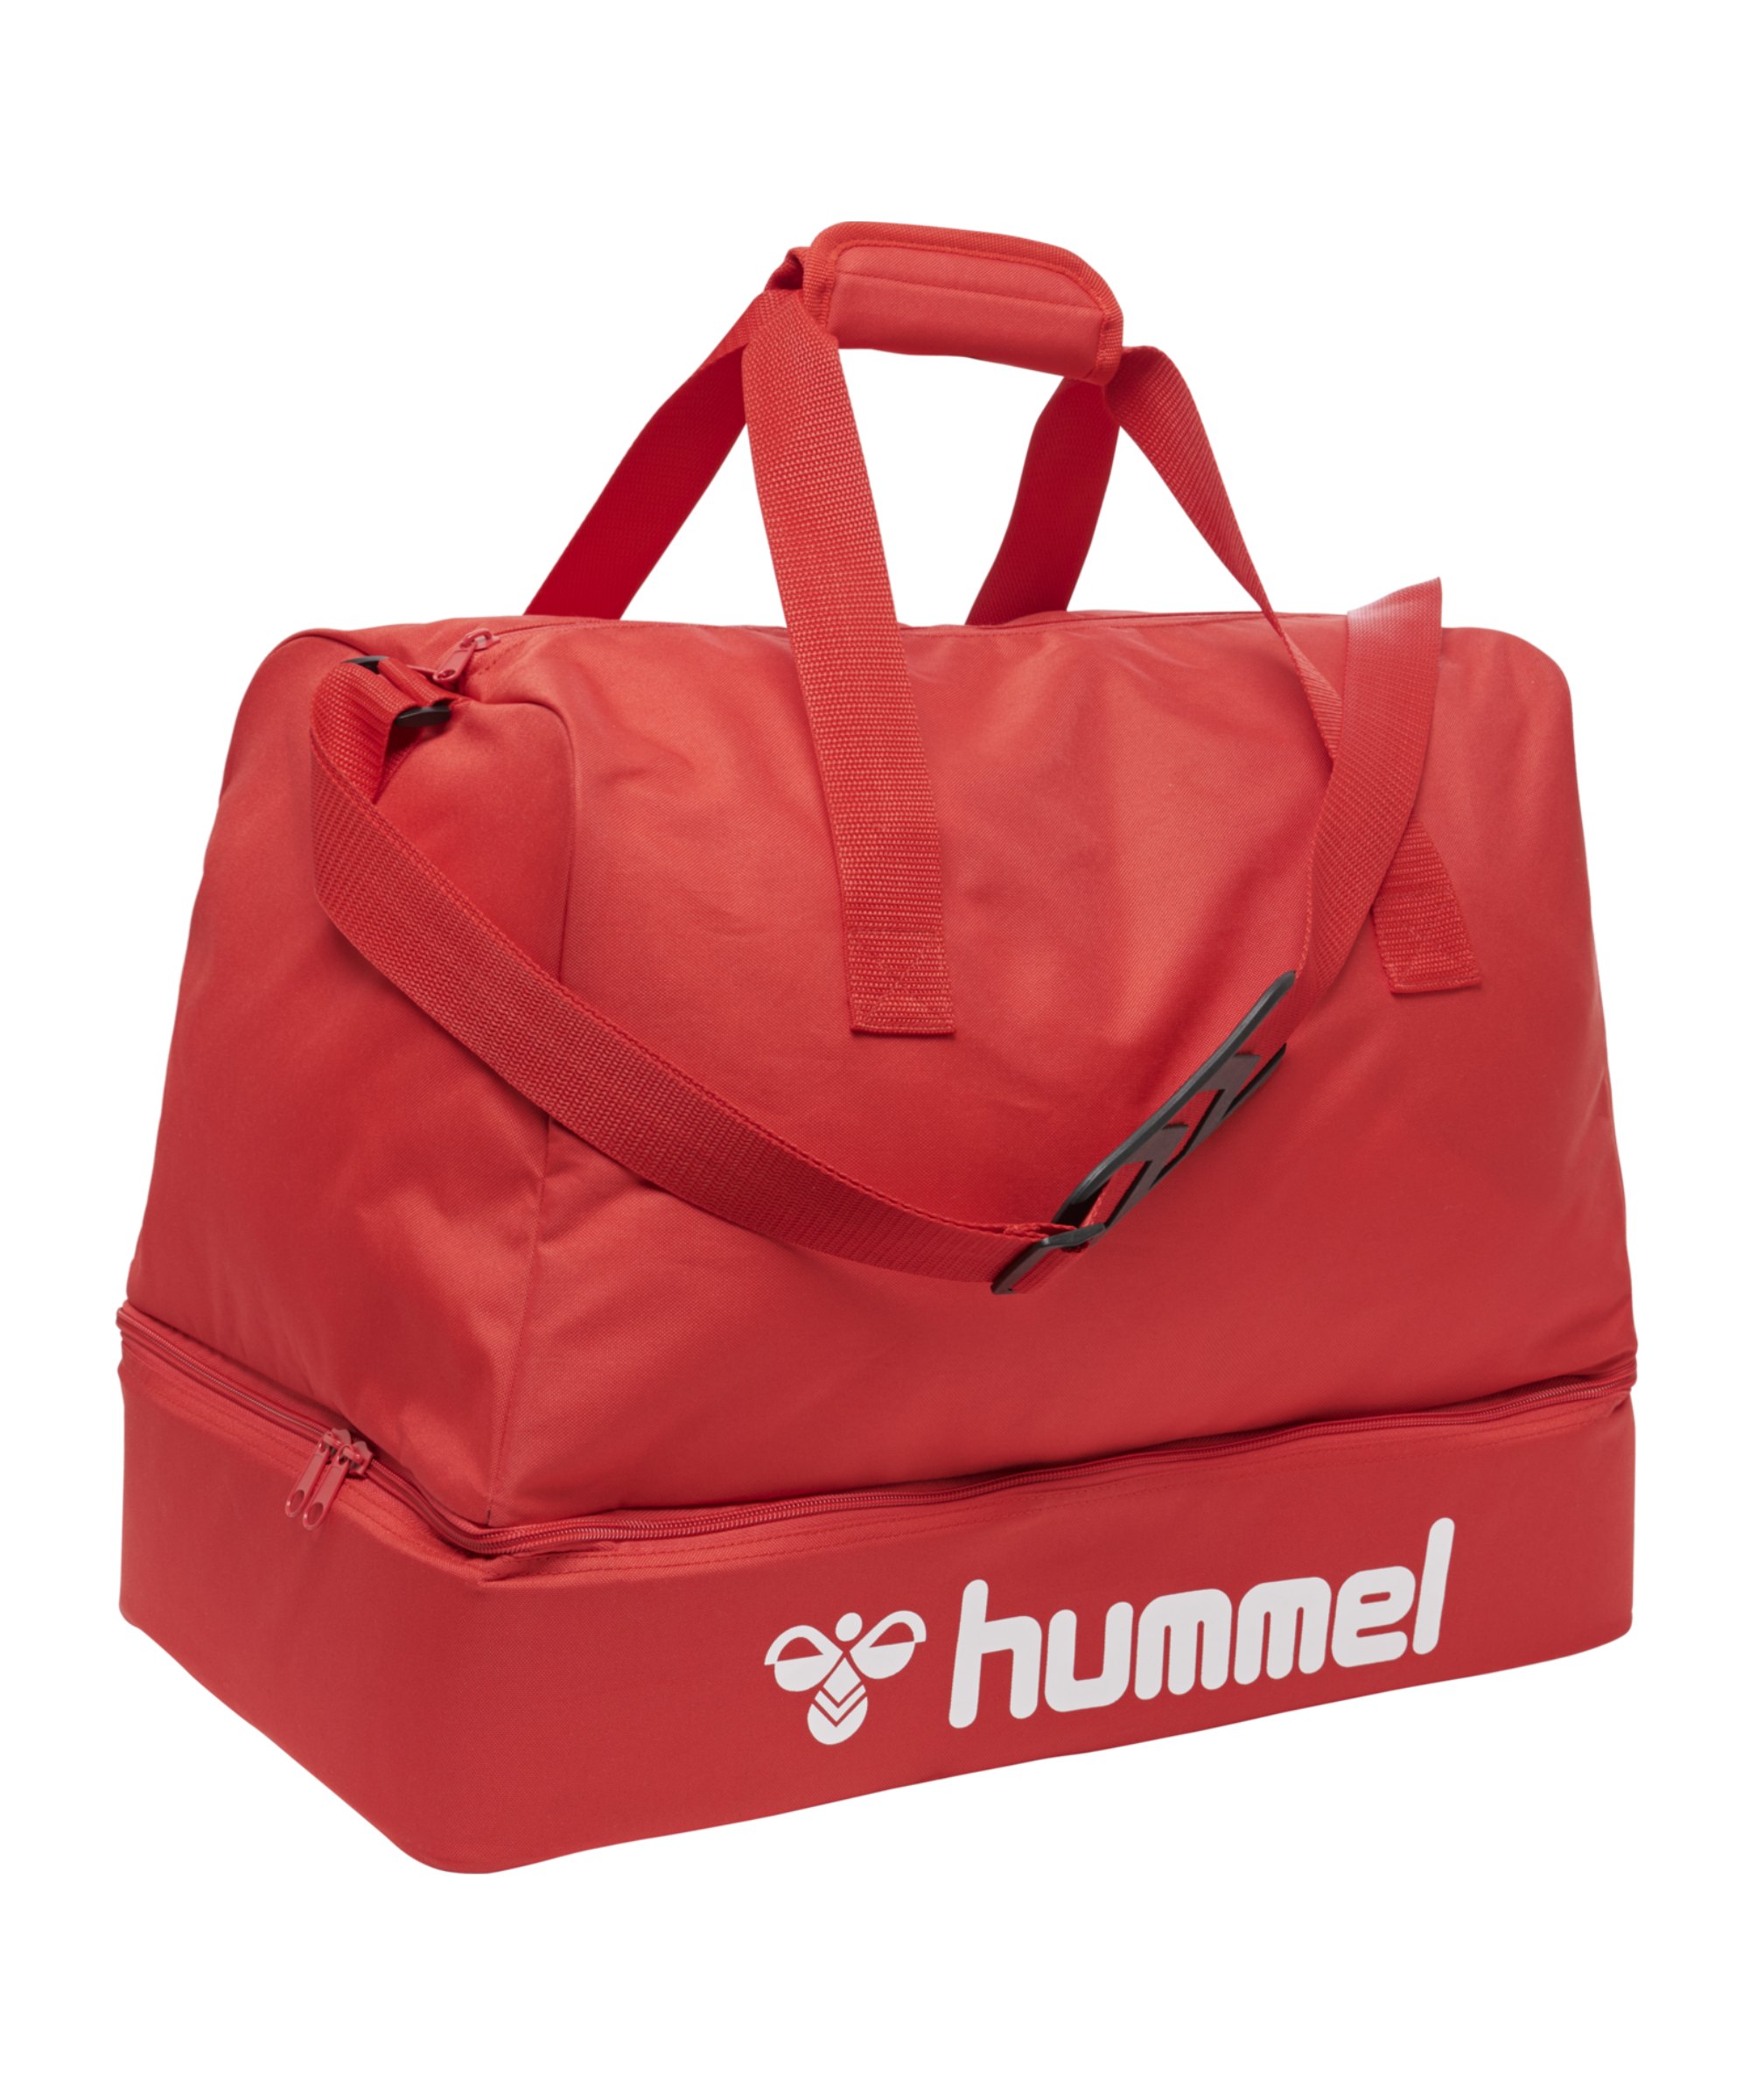 Hummel Core Football Bag Sporttasche Gr. L F3062 - rot